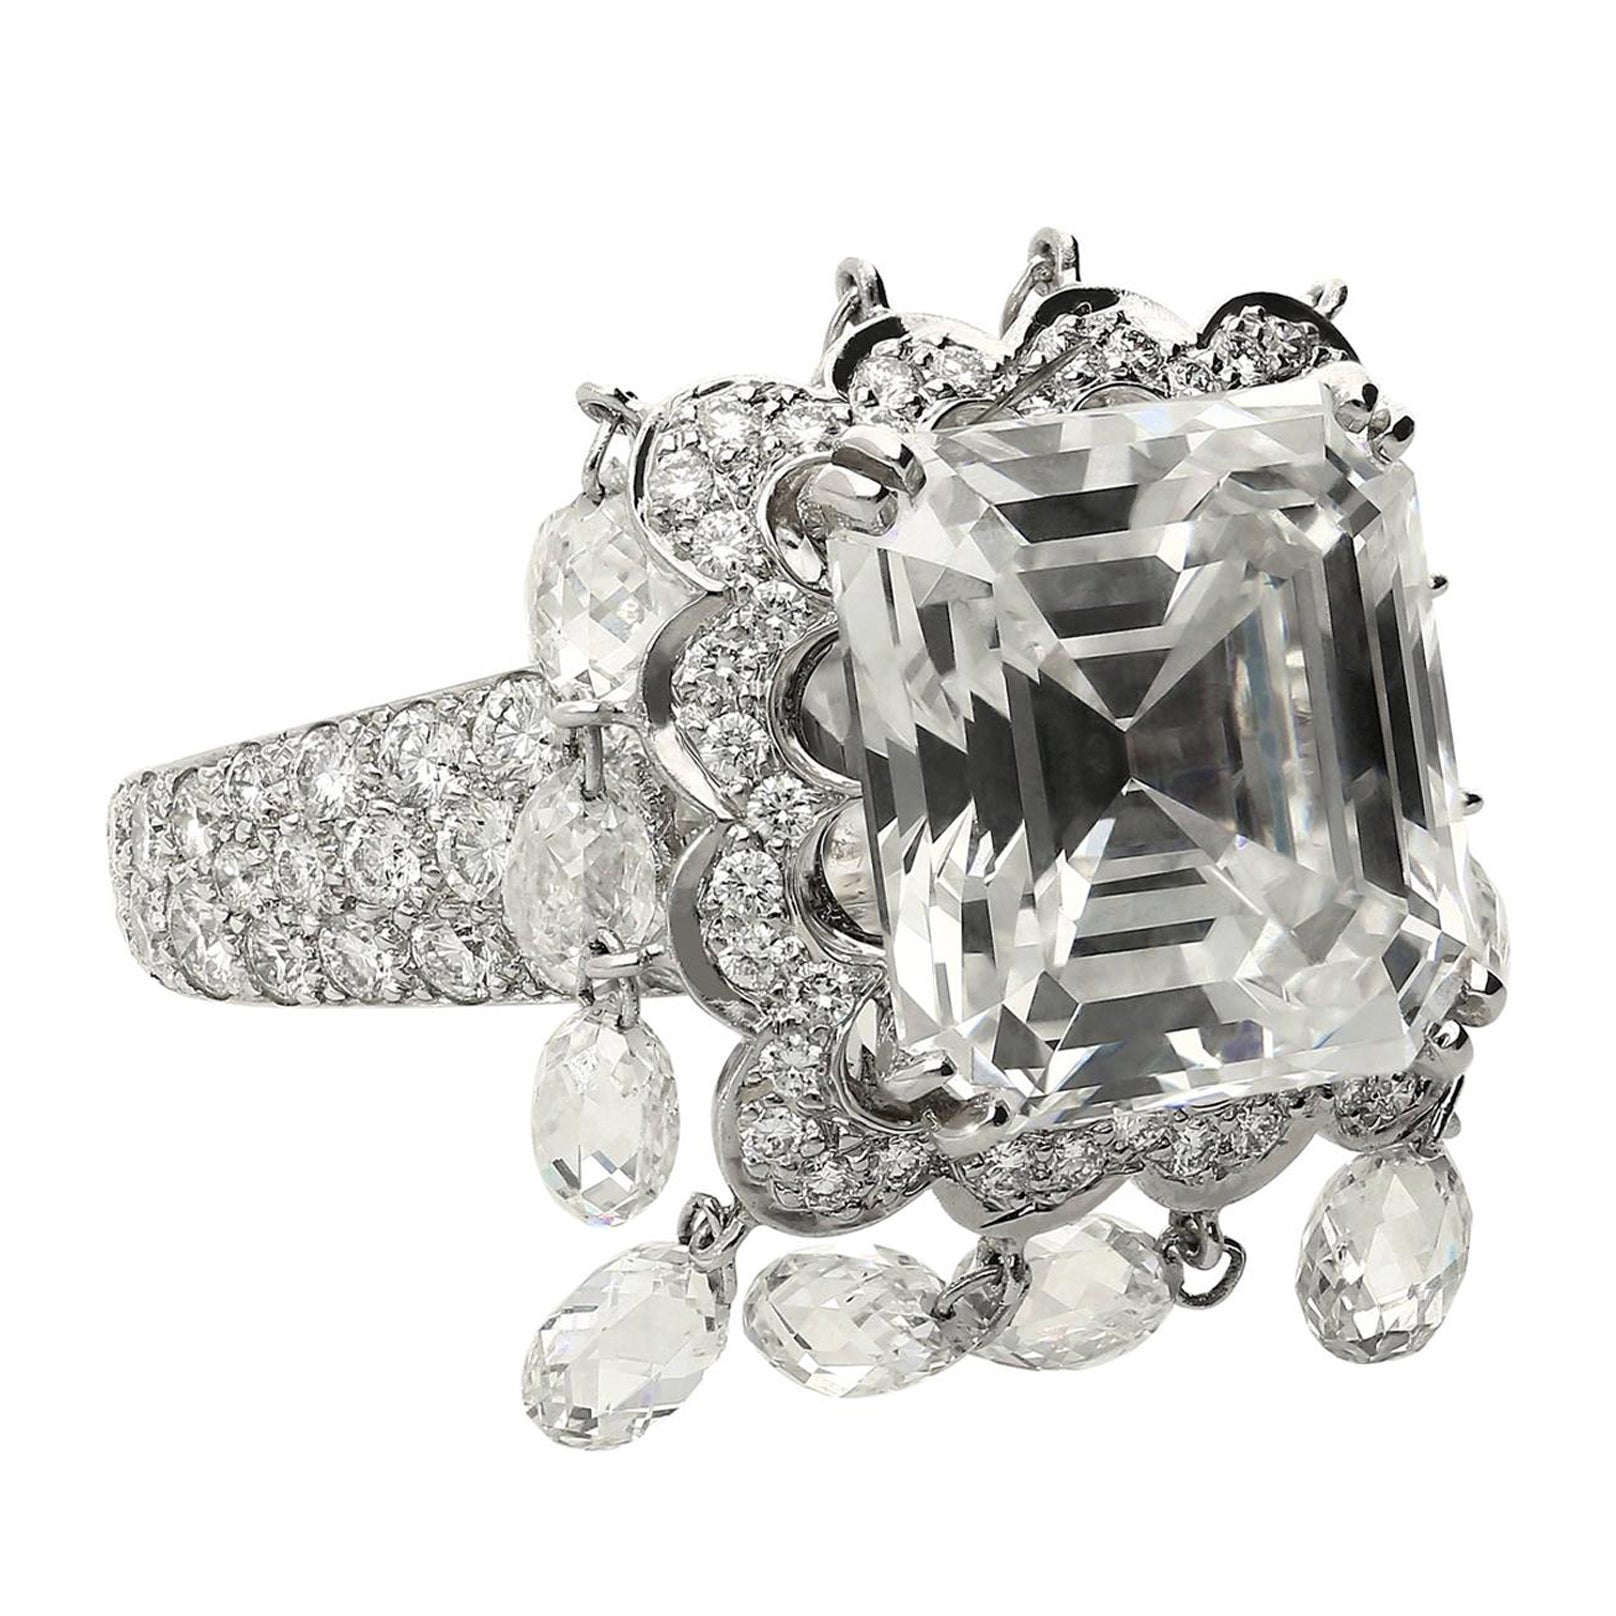 Boucheron "Laperouse" 8.03 Carat Emerald Cut G VS1 GIA Certified Diamond Ring For Sale